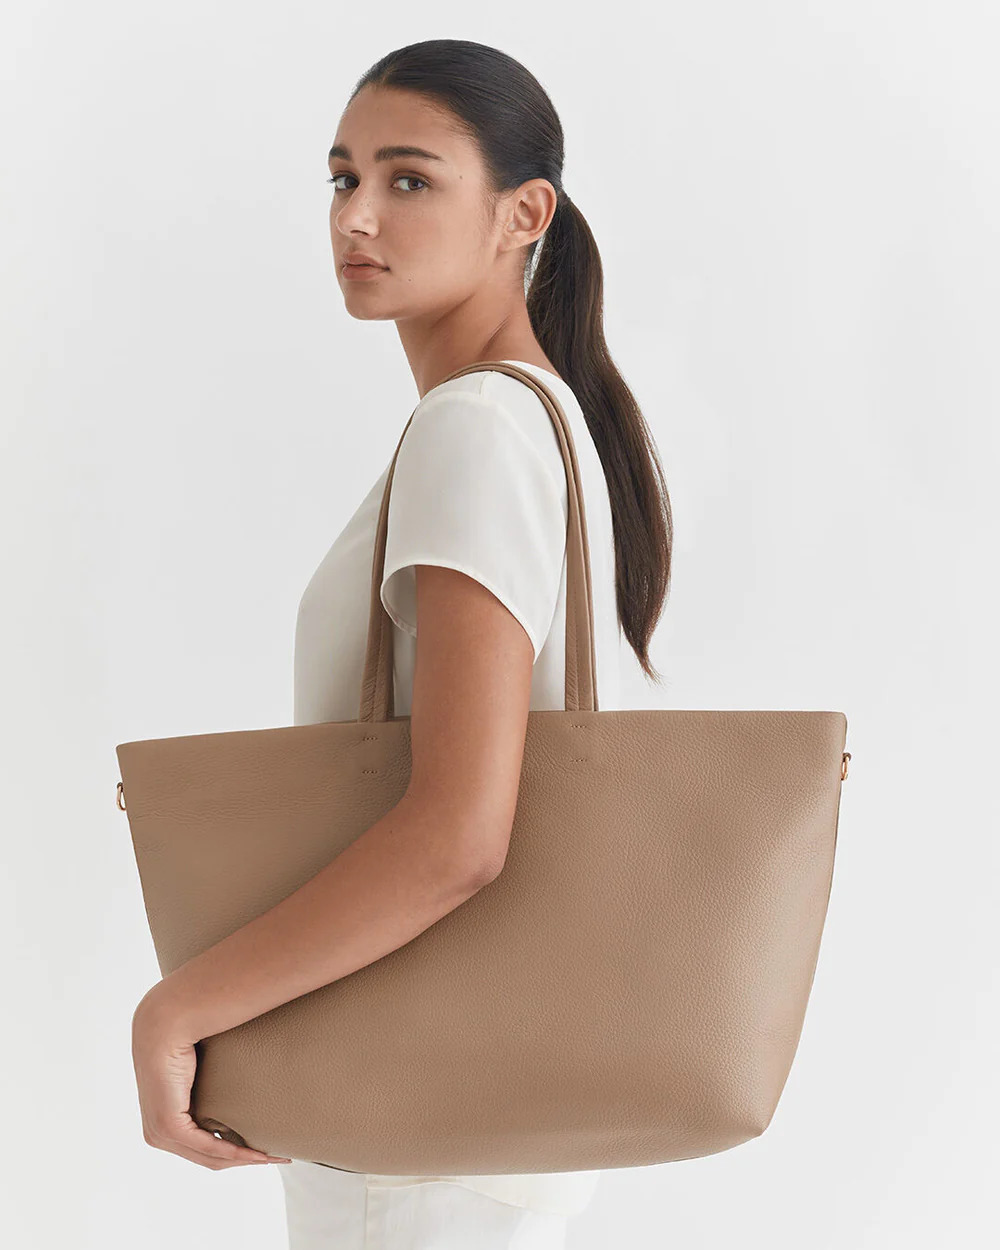 Model wearing a Cuyana Customizable Bag